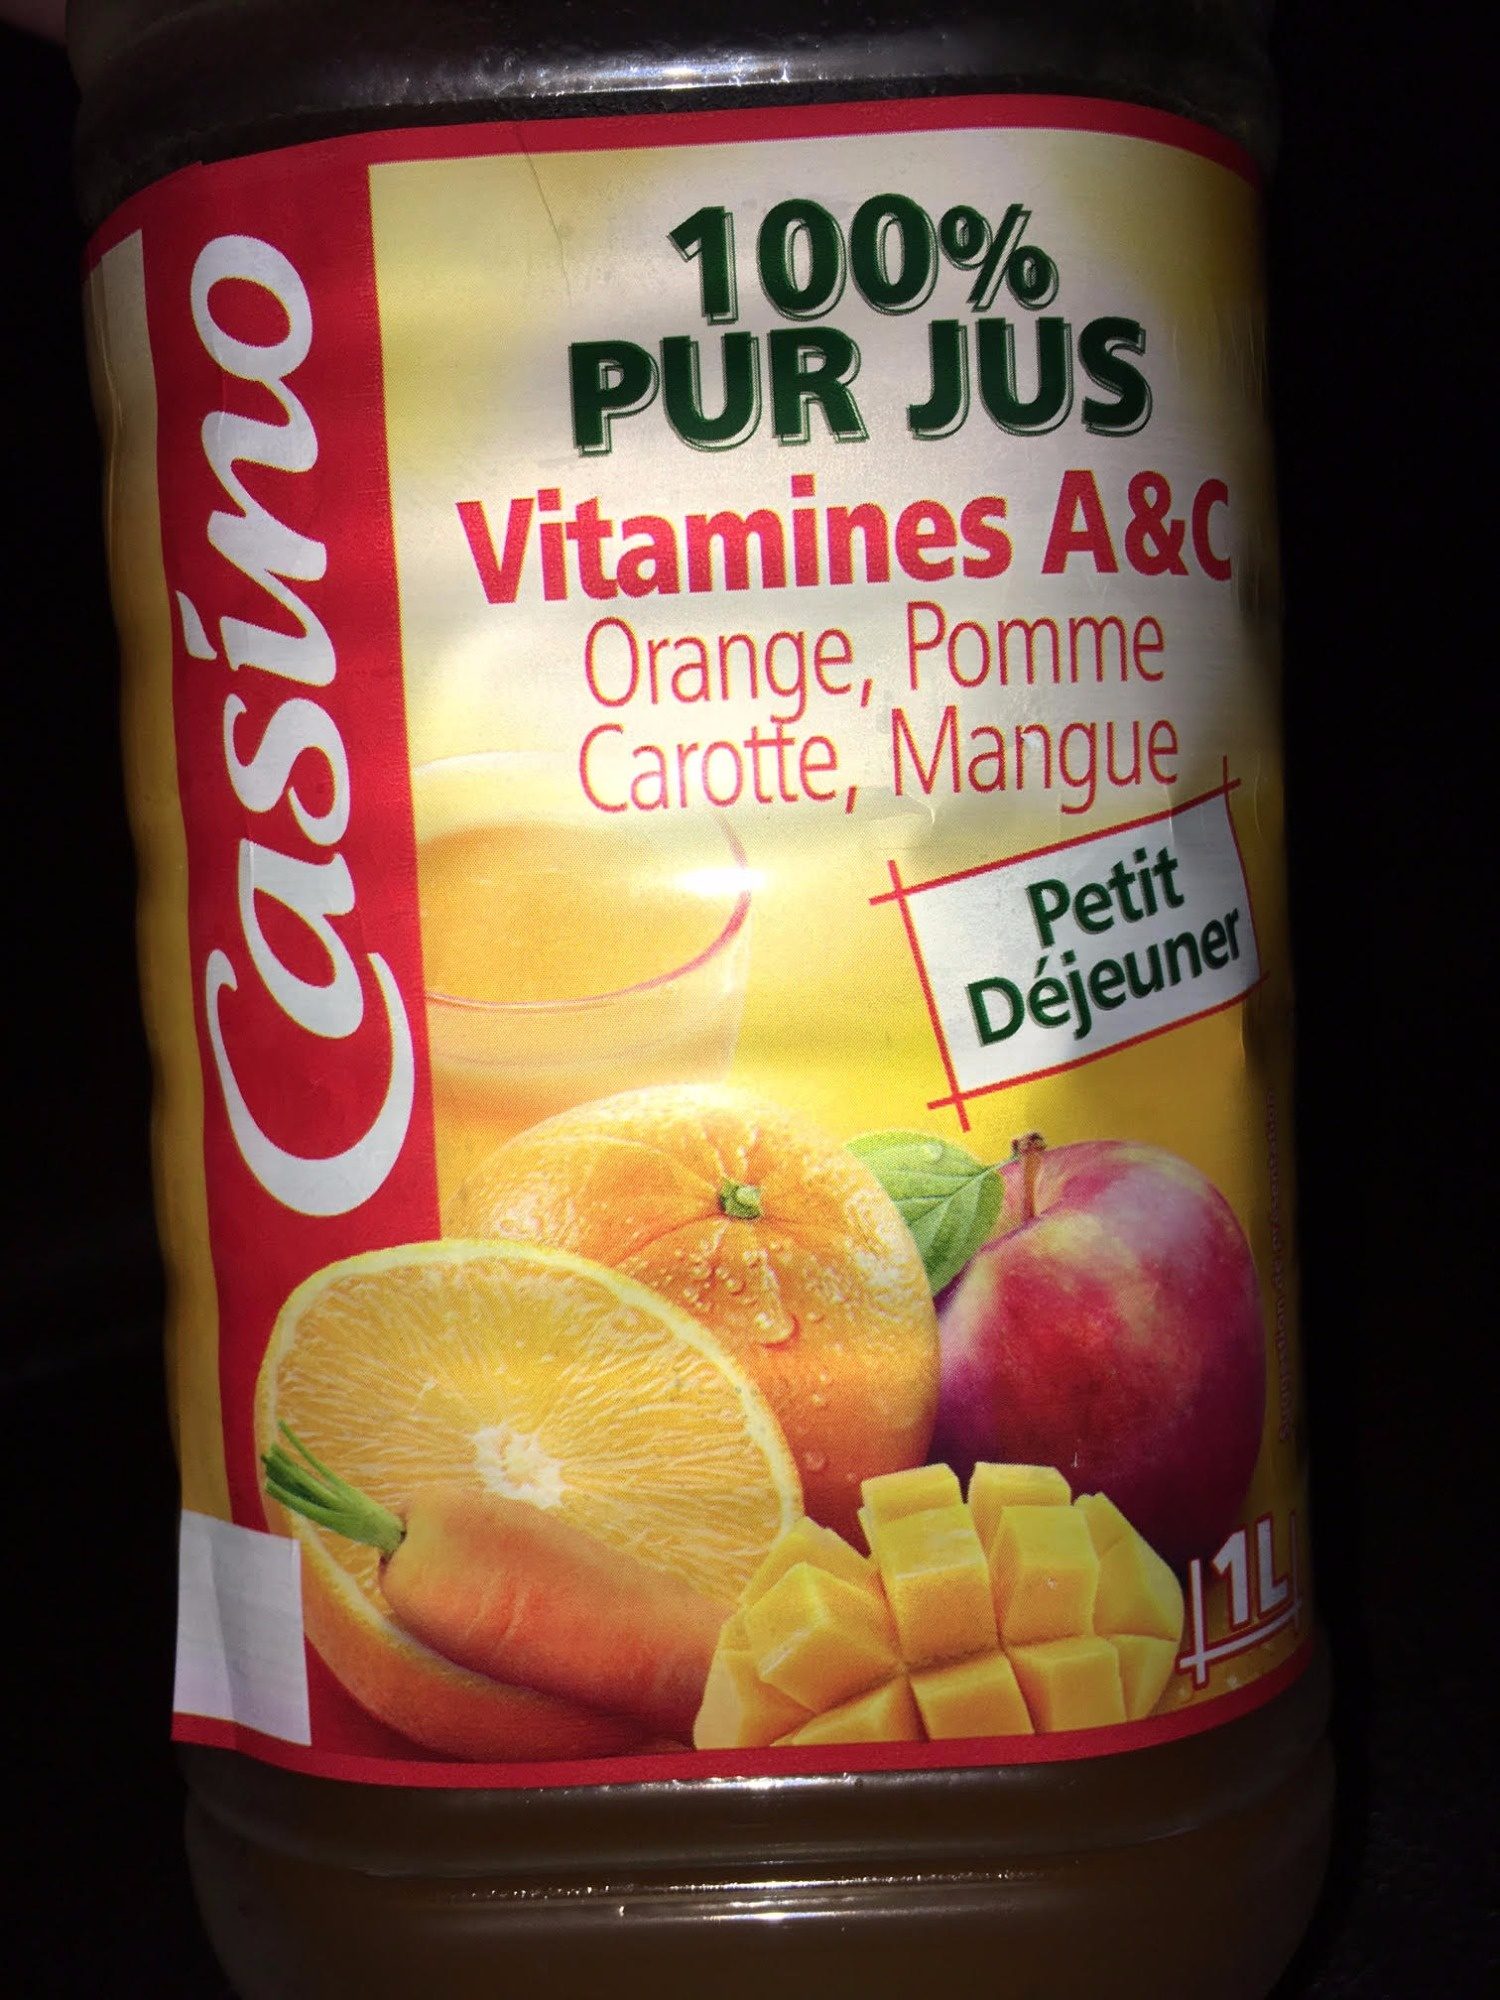 100% Pur jus Source de vitamines A & C - Product - fr